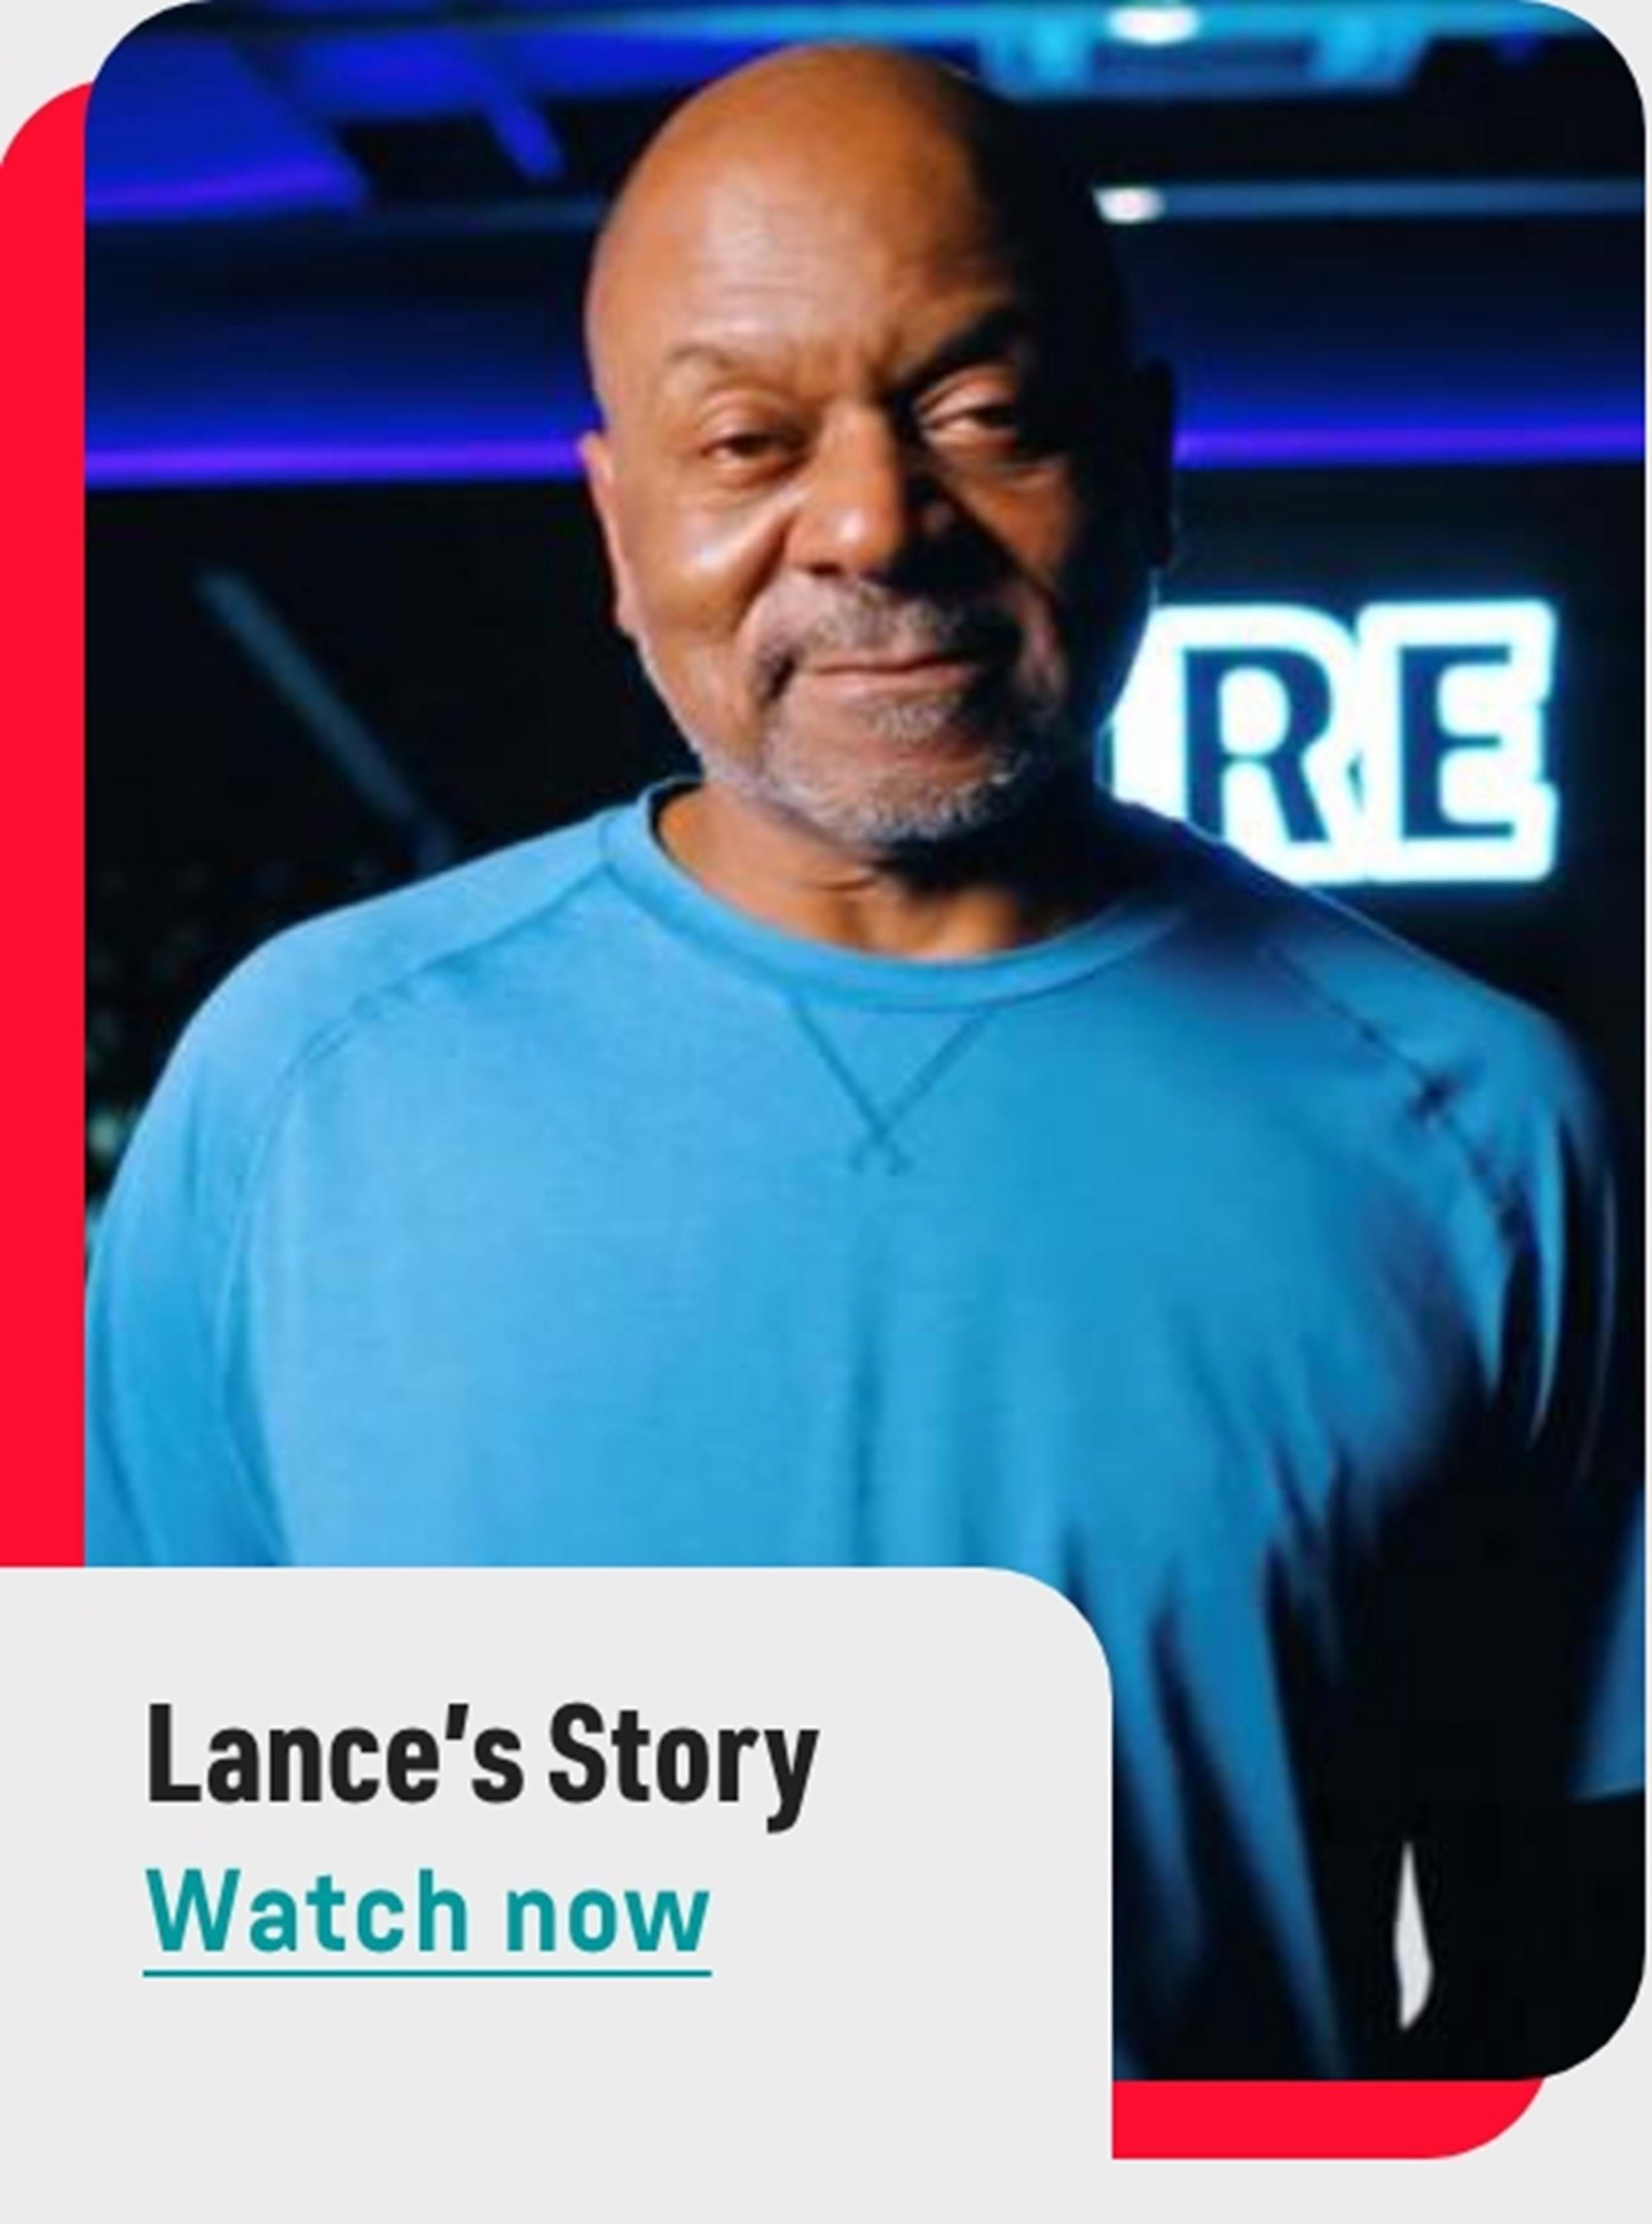 Lance's story